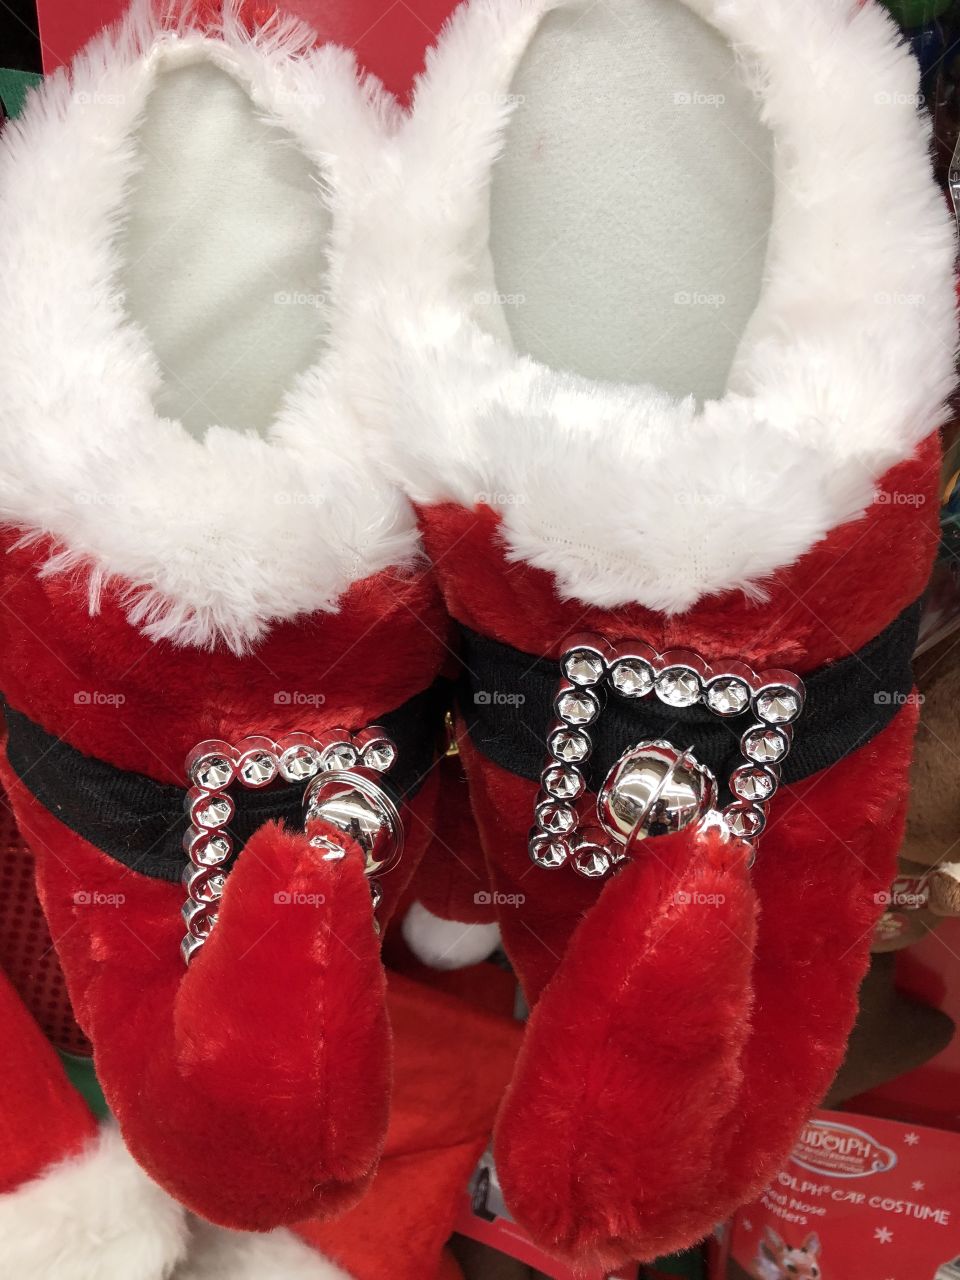 Santa shoes